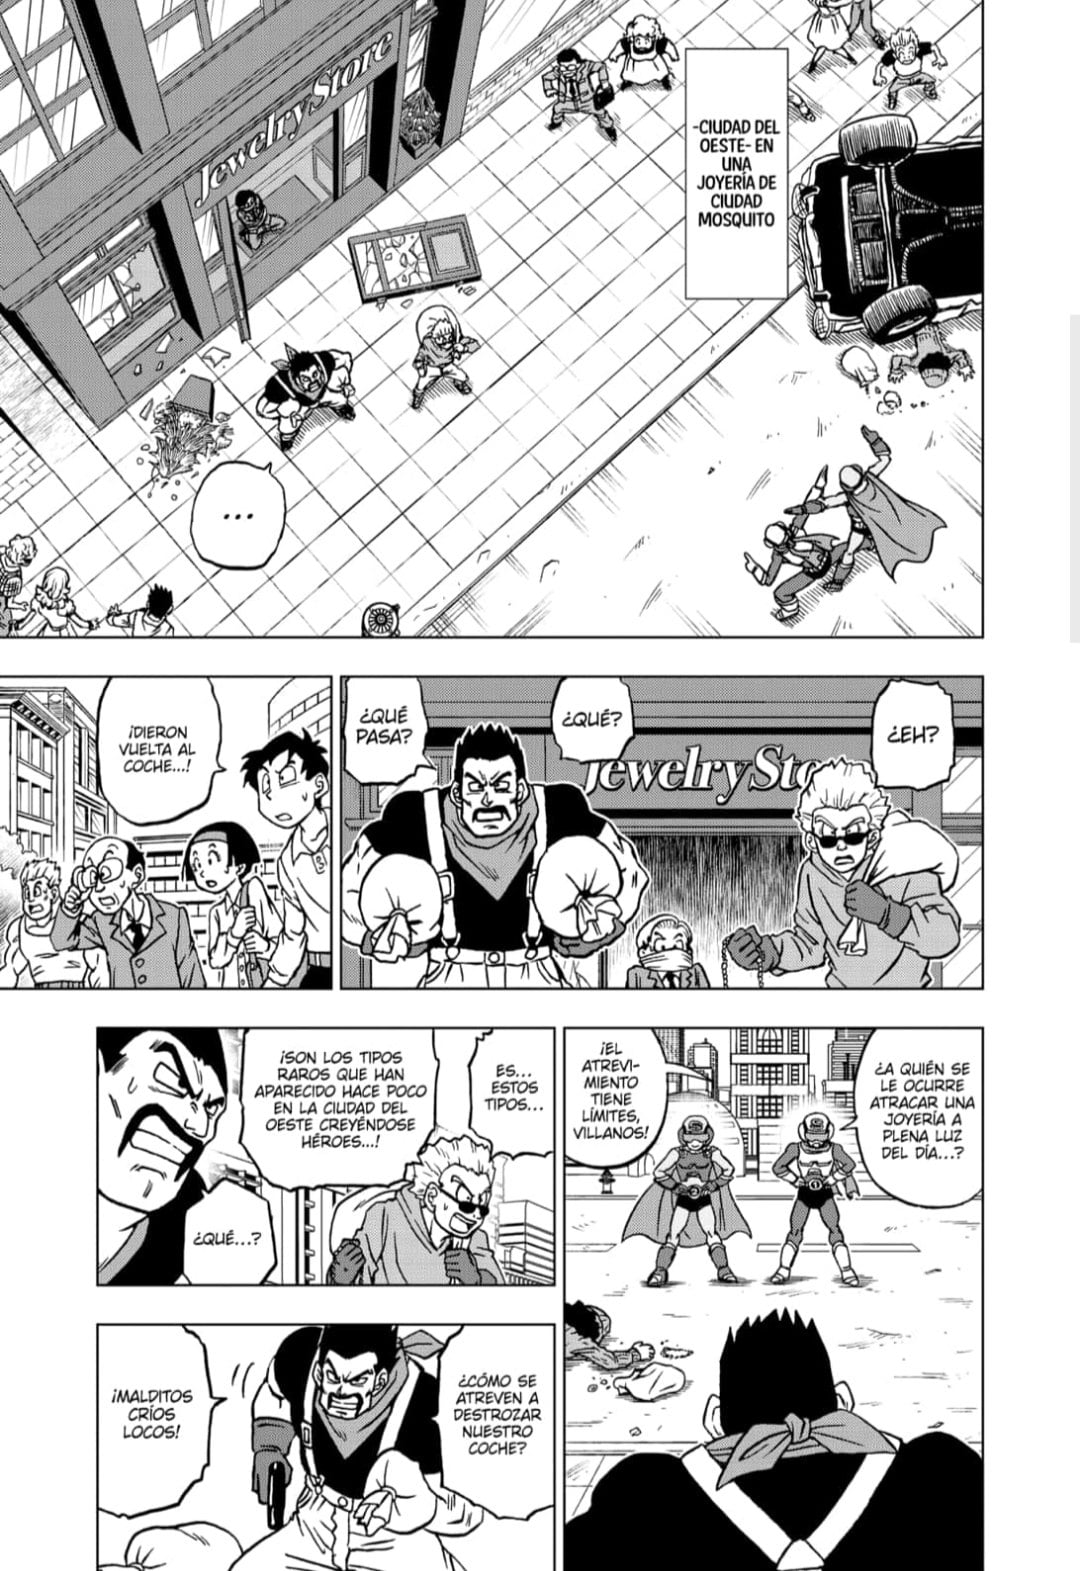 Capitulo 88 del manga de Dragon Ball Super 🙌🏼 parte 2 en los comenta